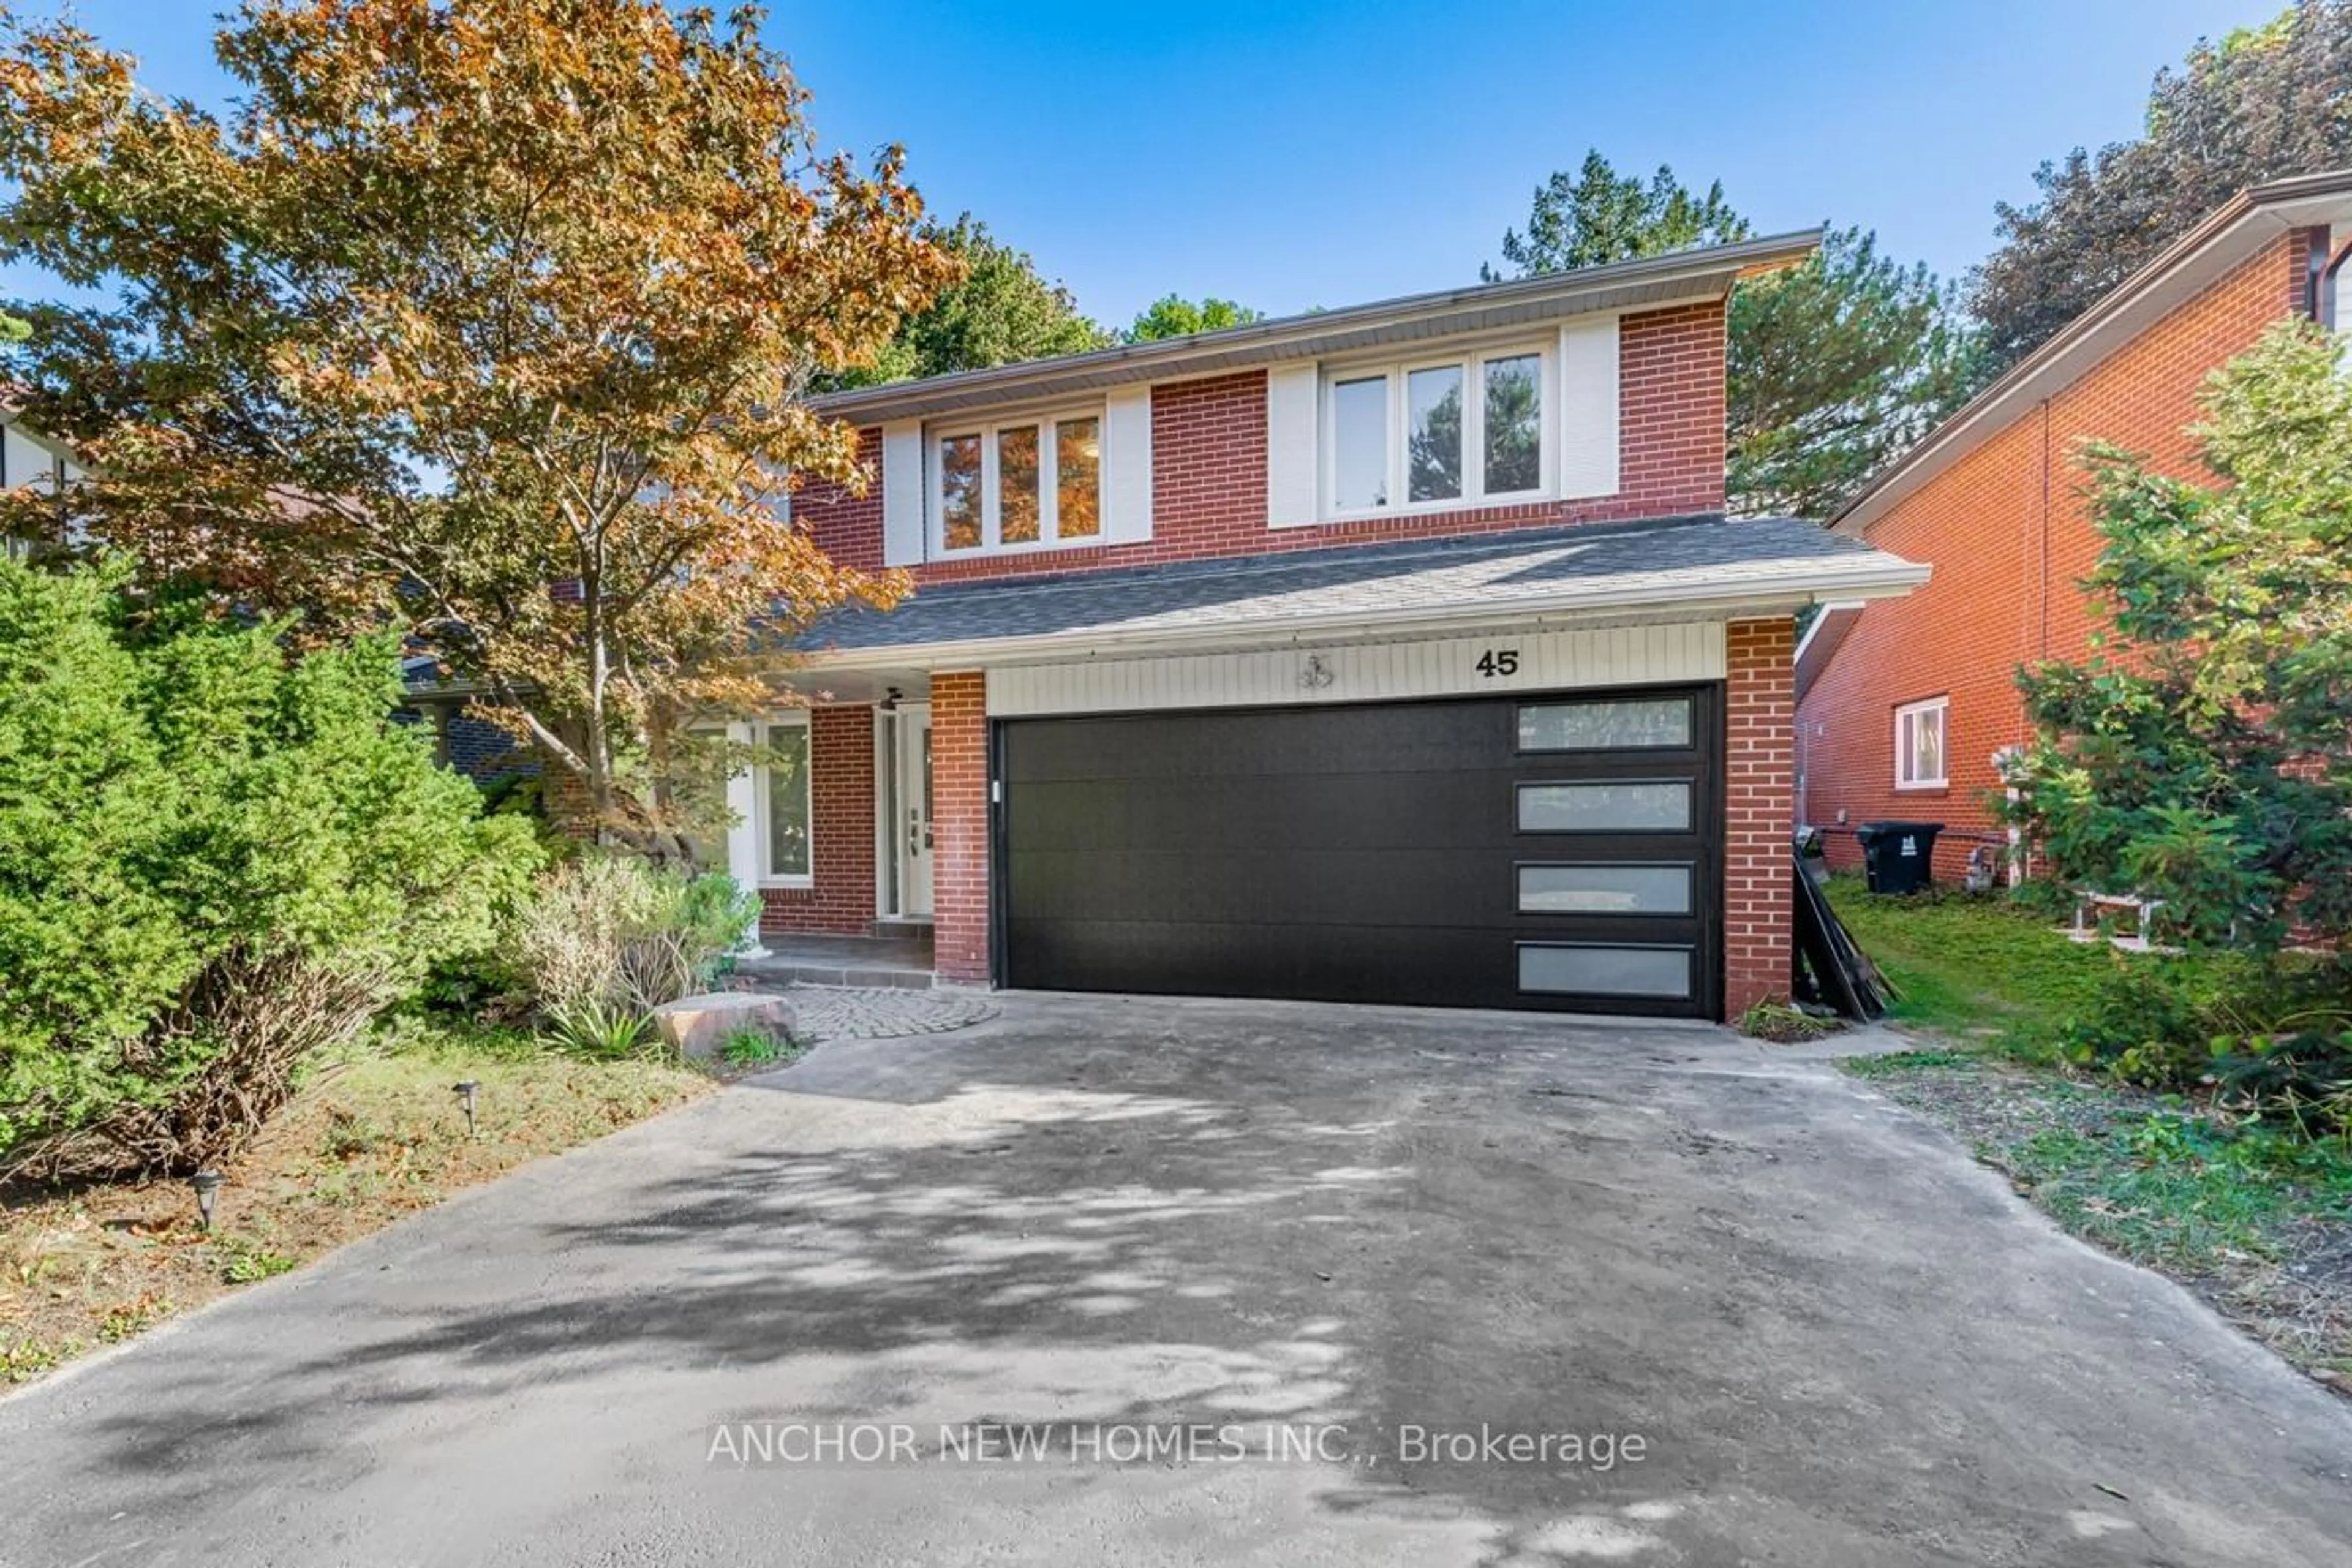 Home with brick exterior material for 45 Kentland Cres, Toronto Ontario M2M 2X7